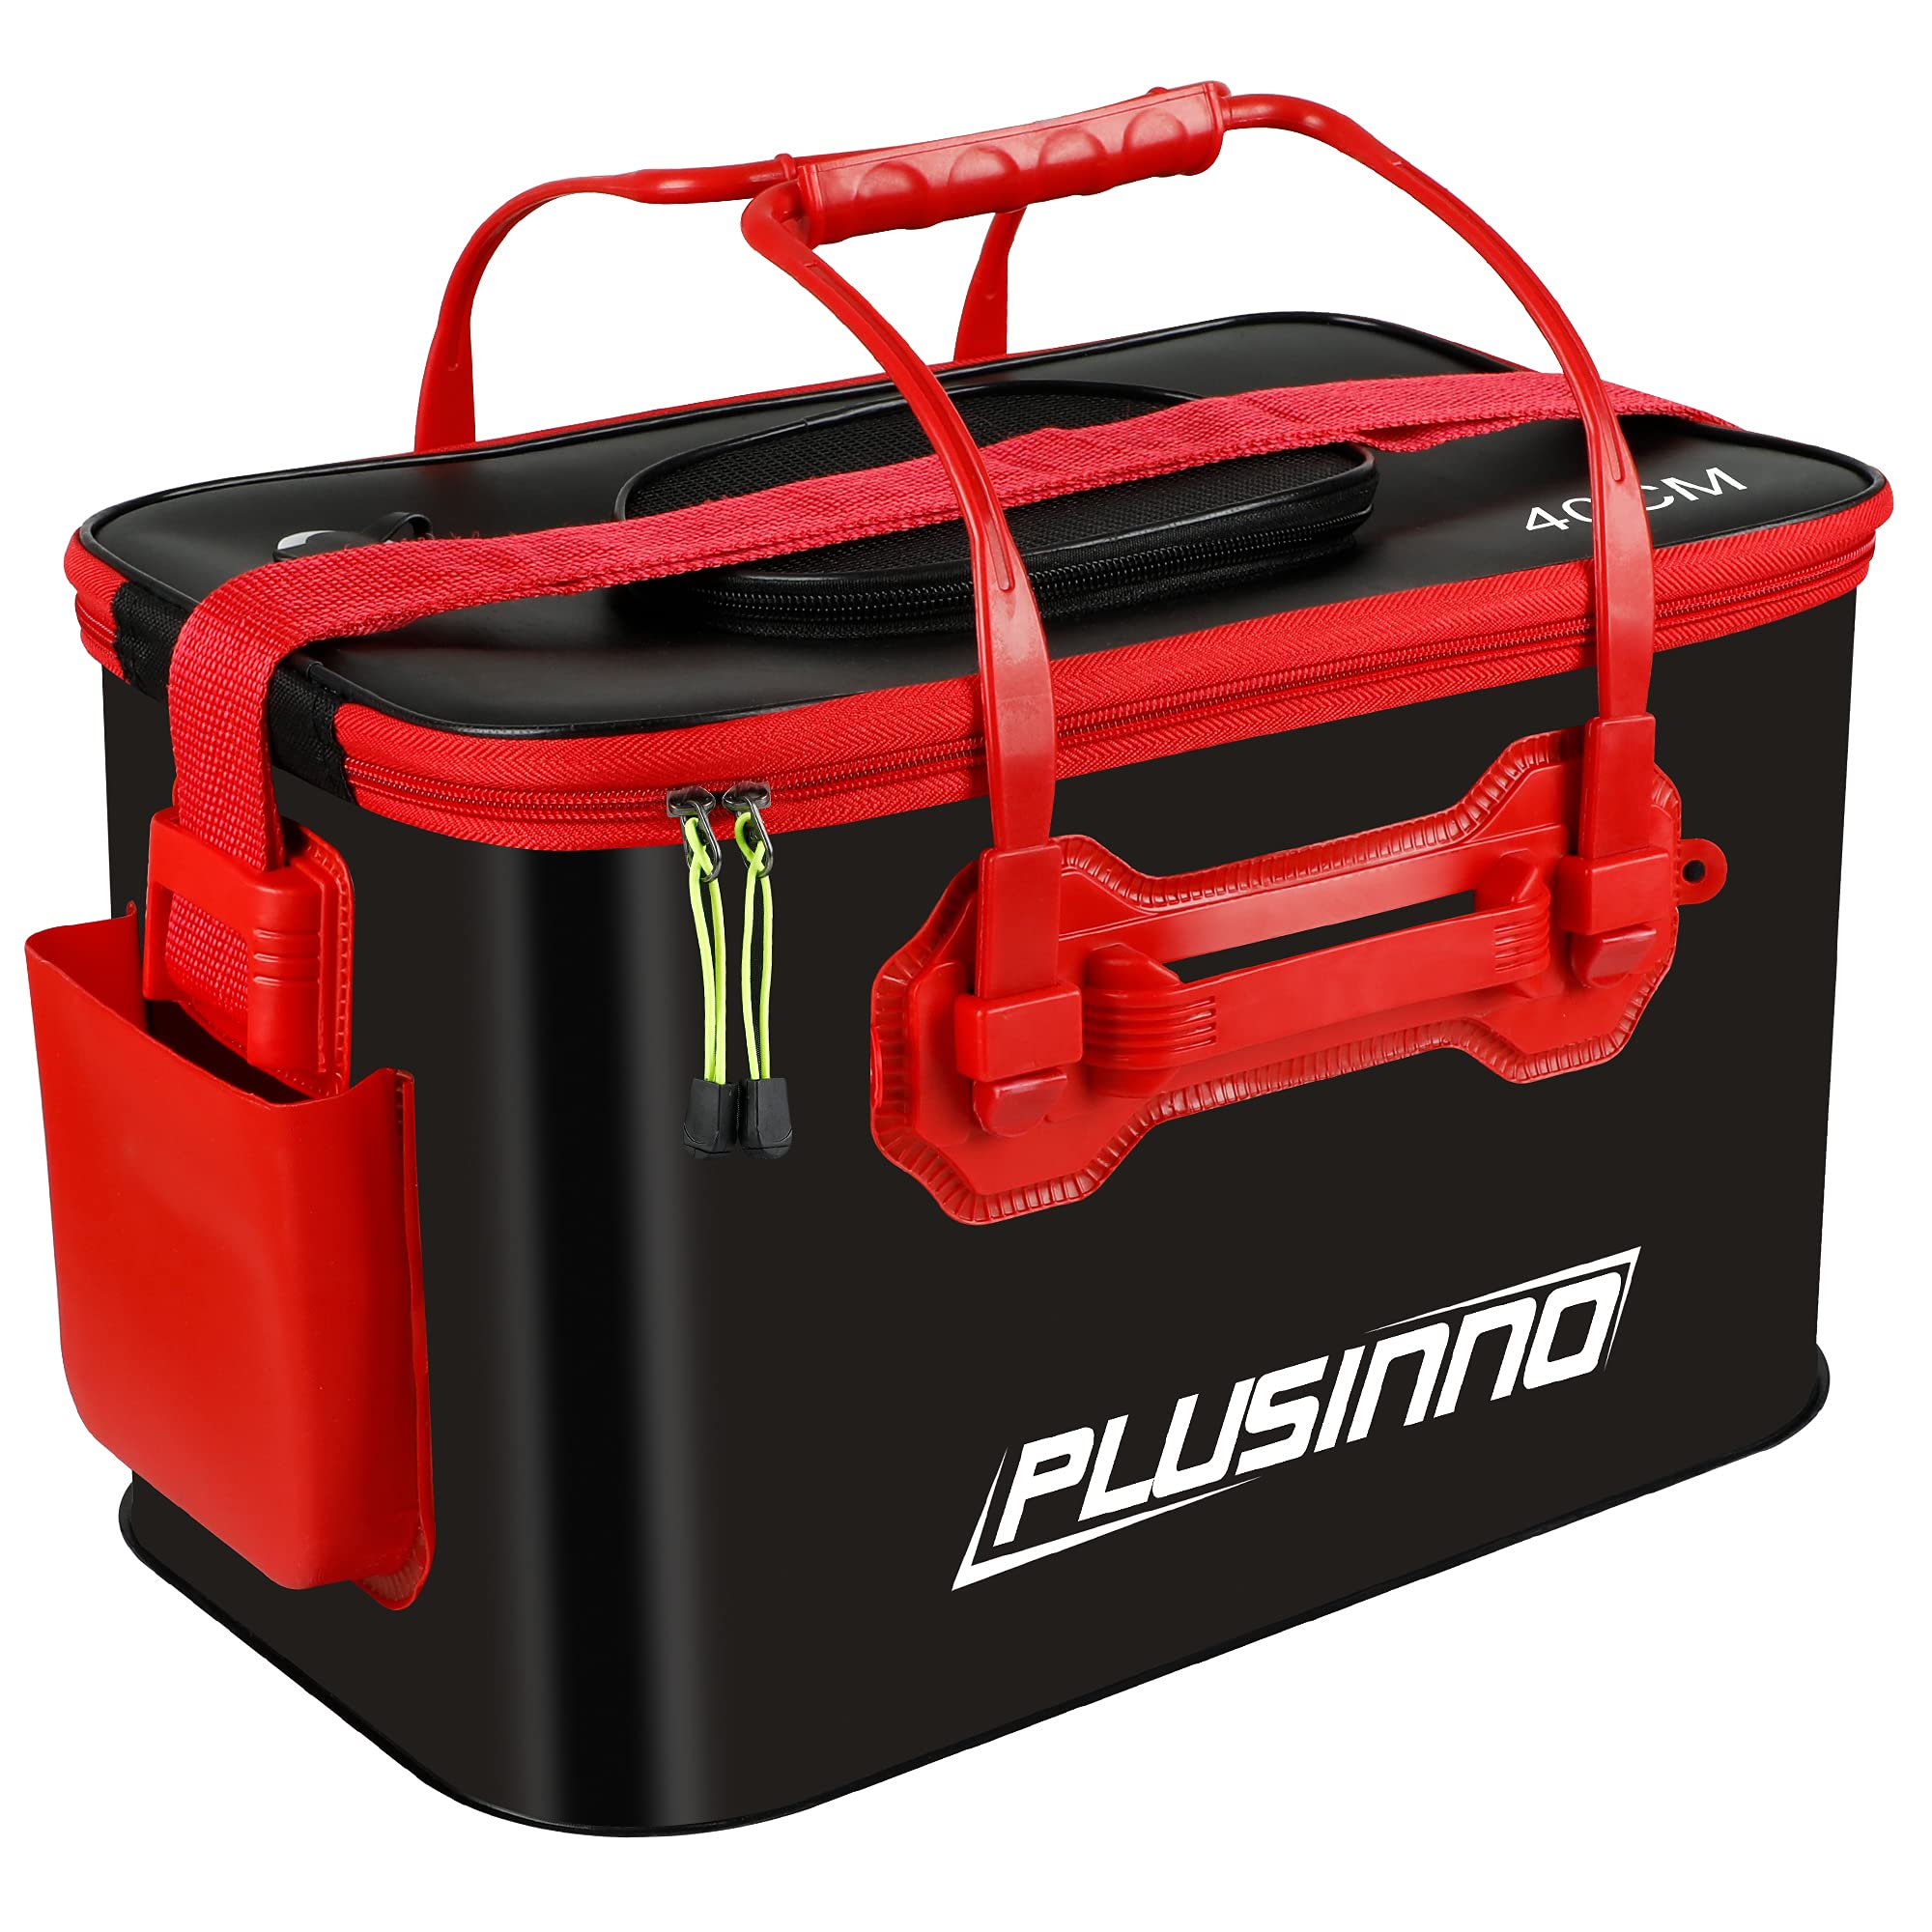 Portable EVA Fishing Bag, Collapsible Fishing Bucket Live Fish Box